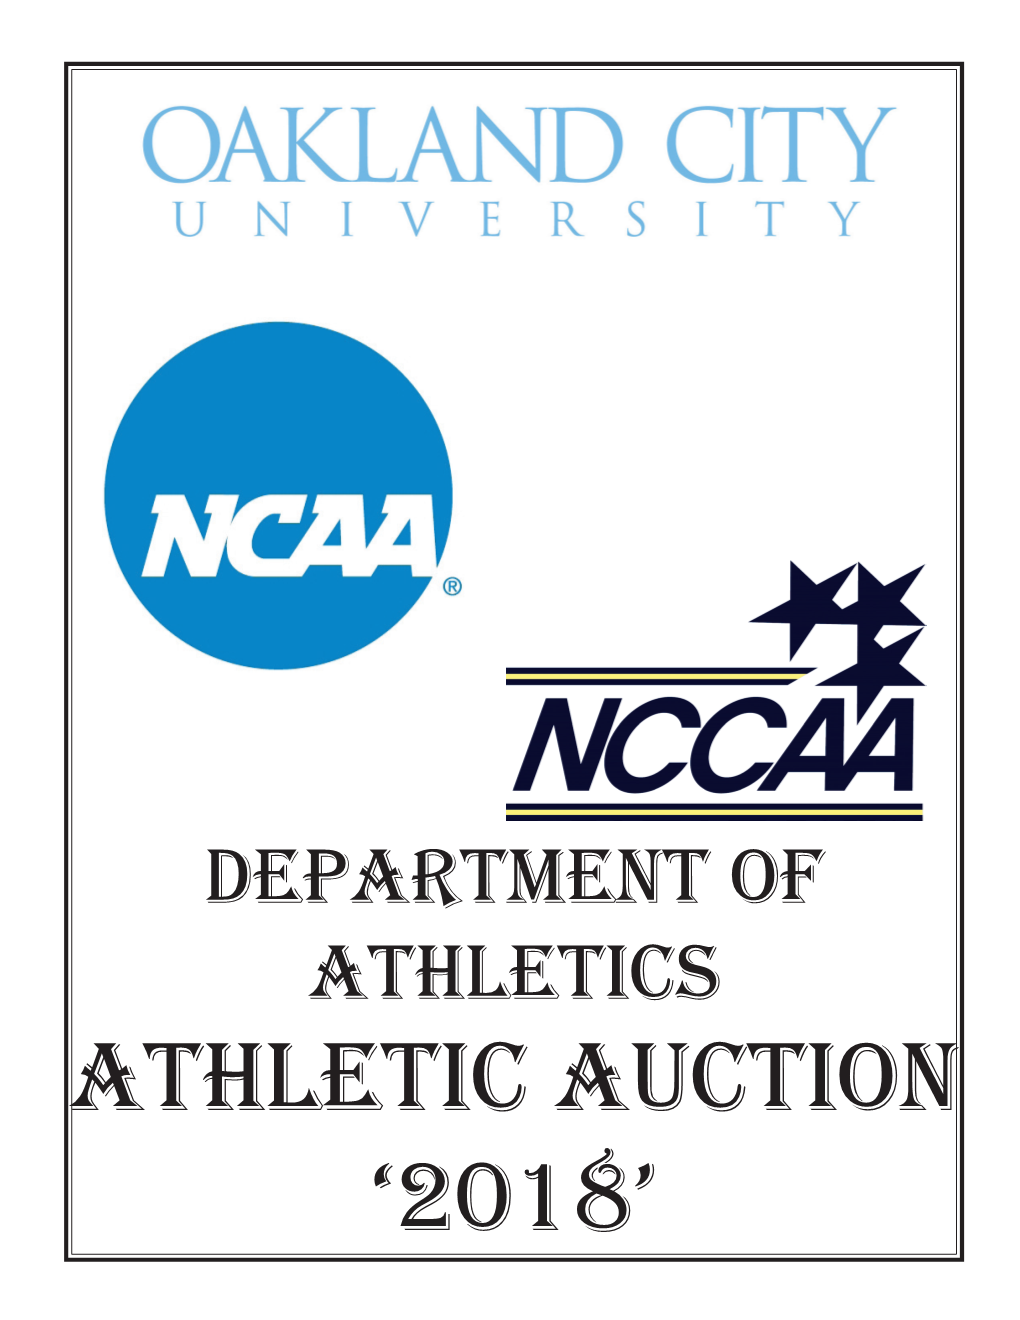 Athletic Auction '2018'